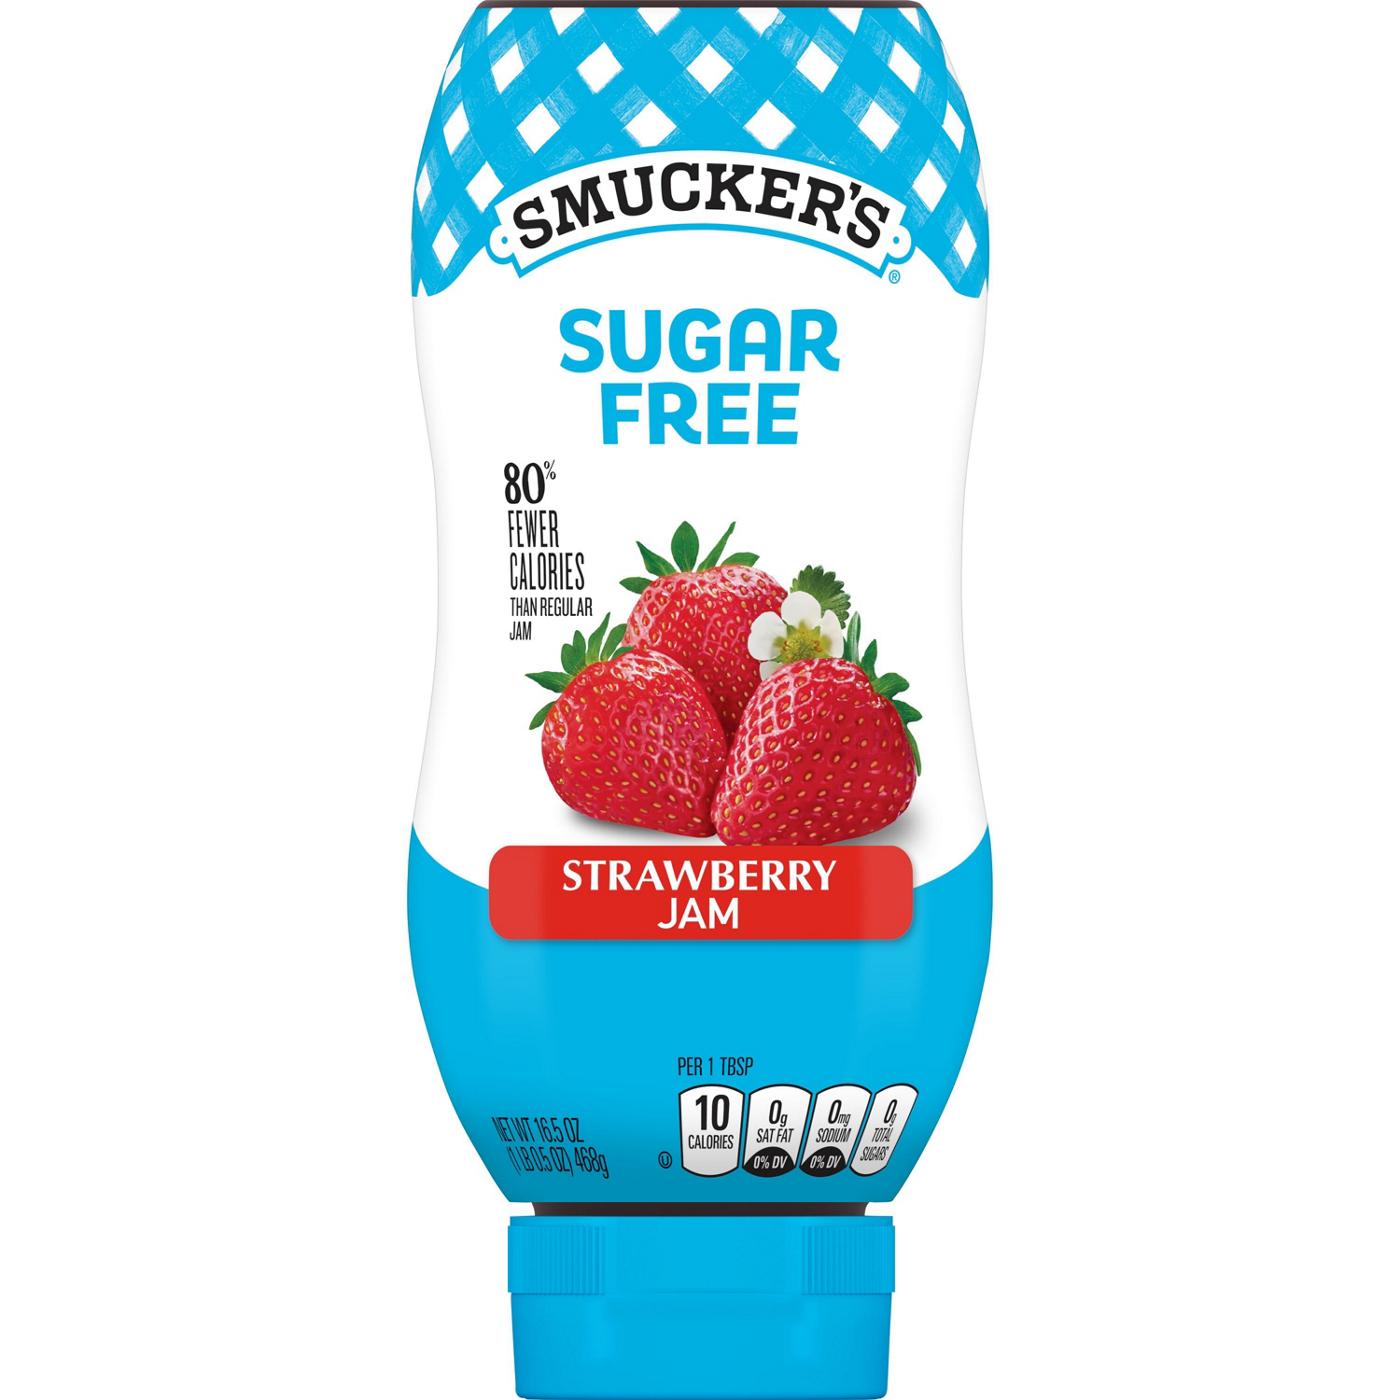 Smucker's Sugar Free Strawberry Jam; image 1 of 4